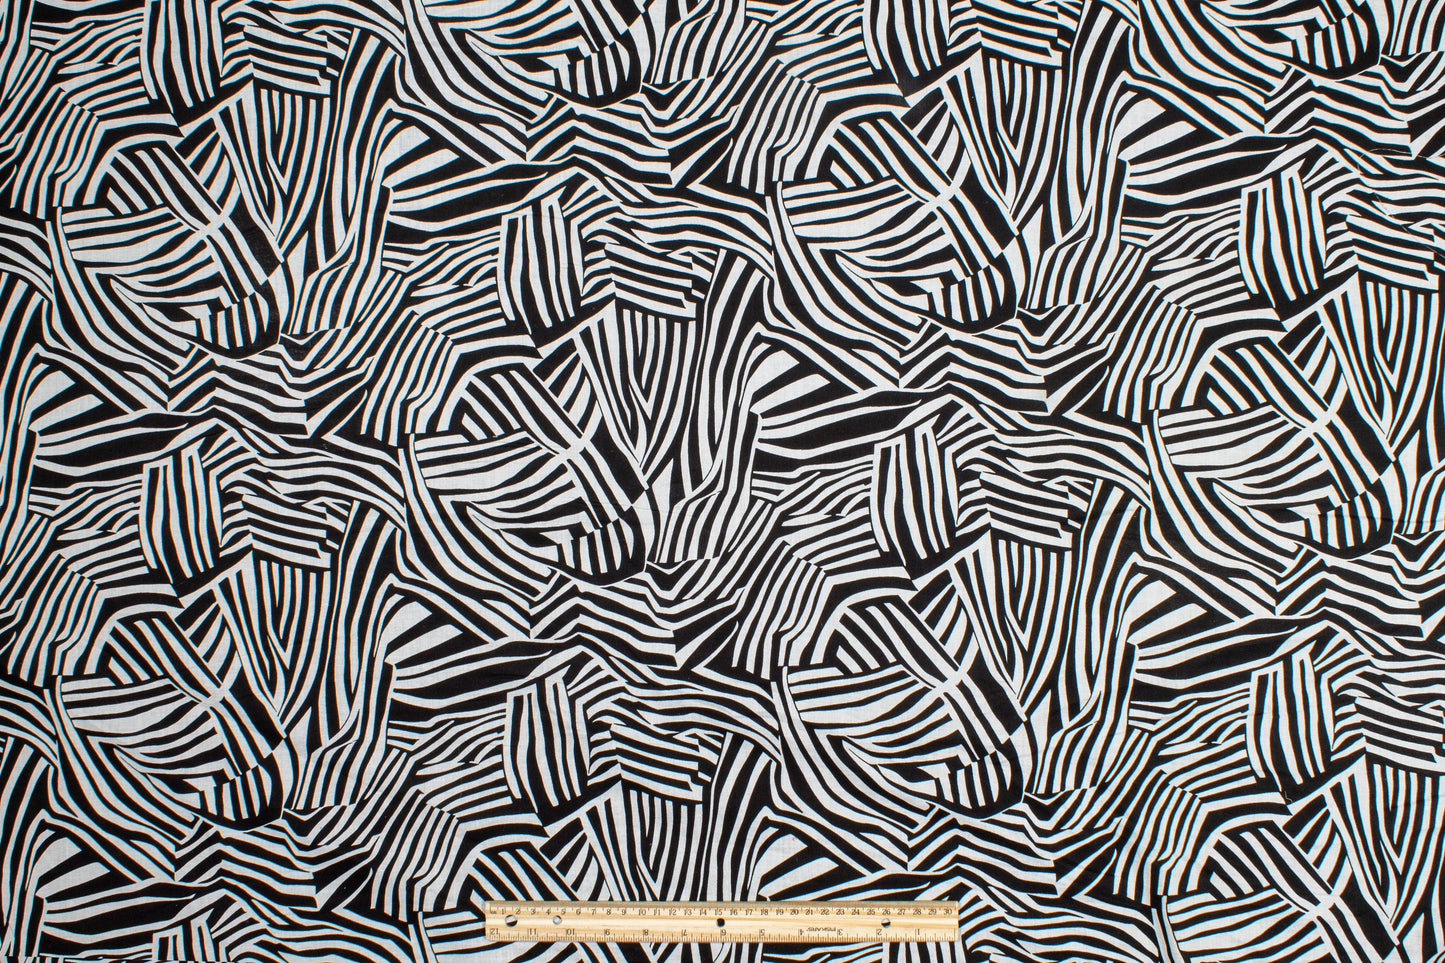 Abstract Zebra Print Cotton Voile - Black and White - Prime Fabrics